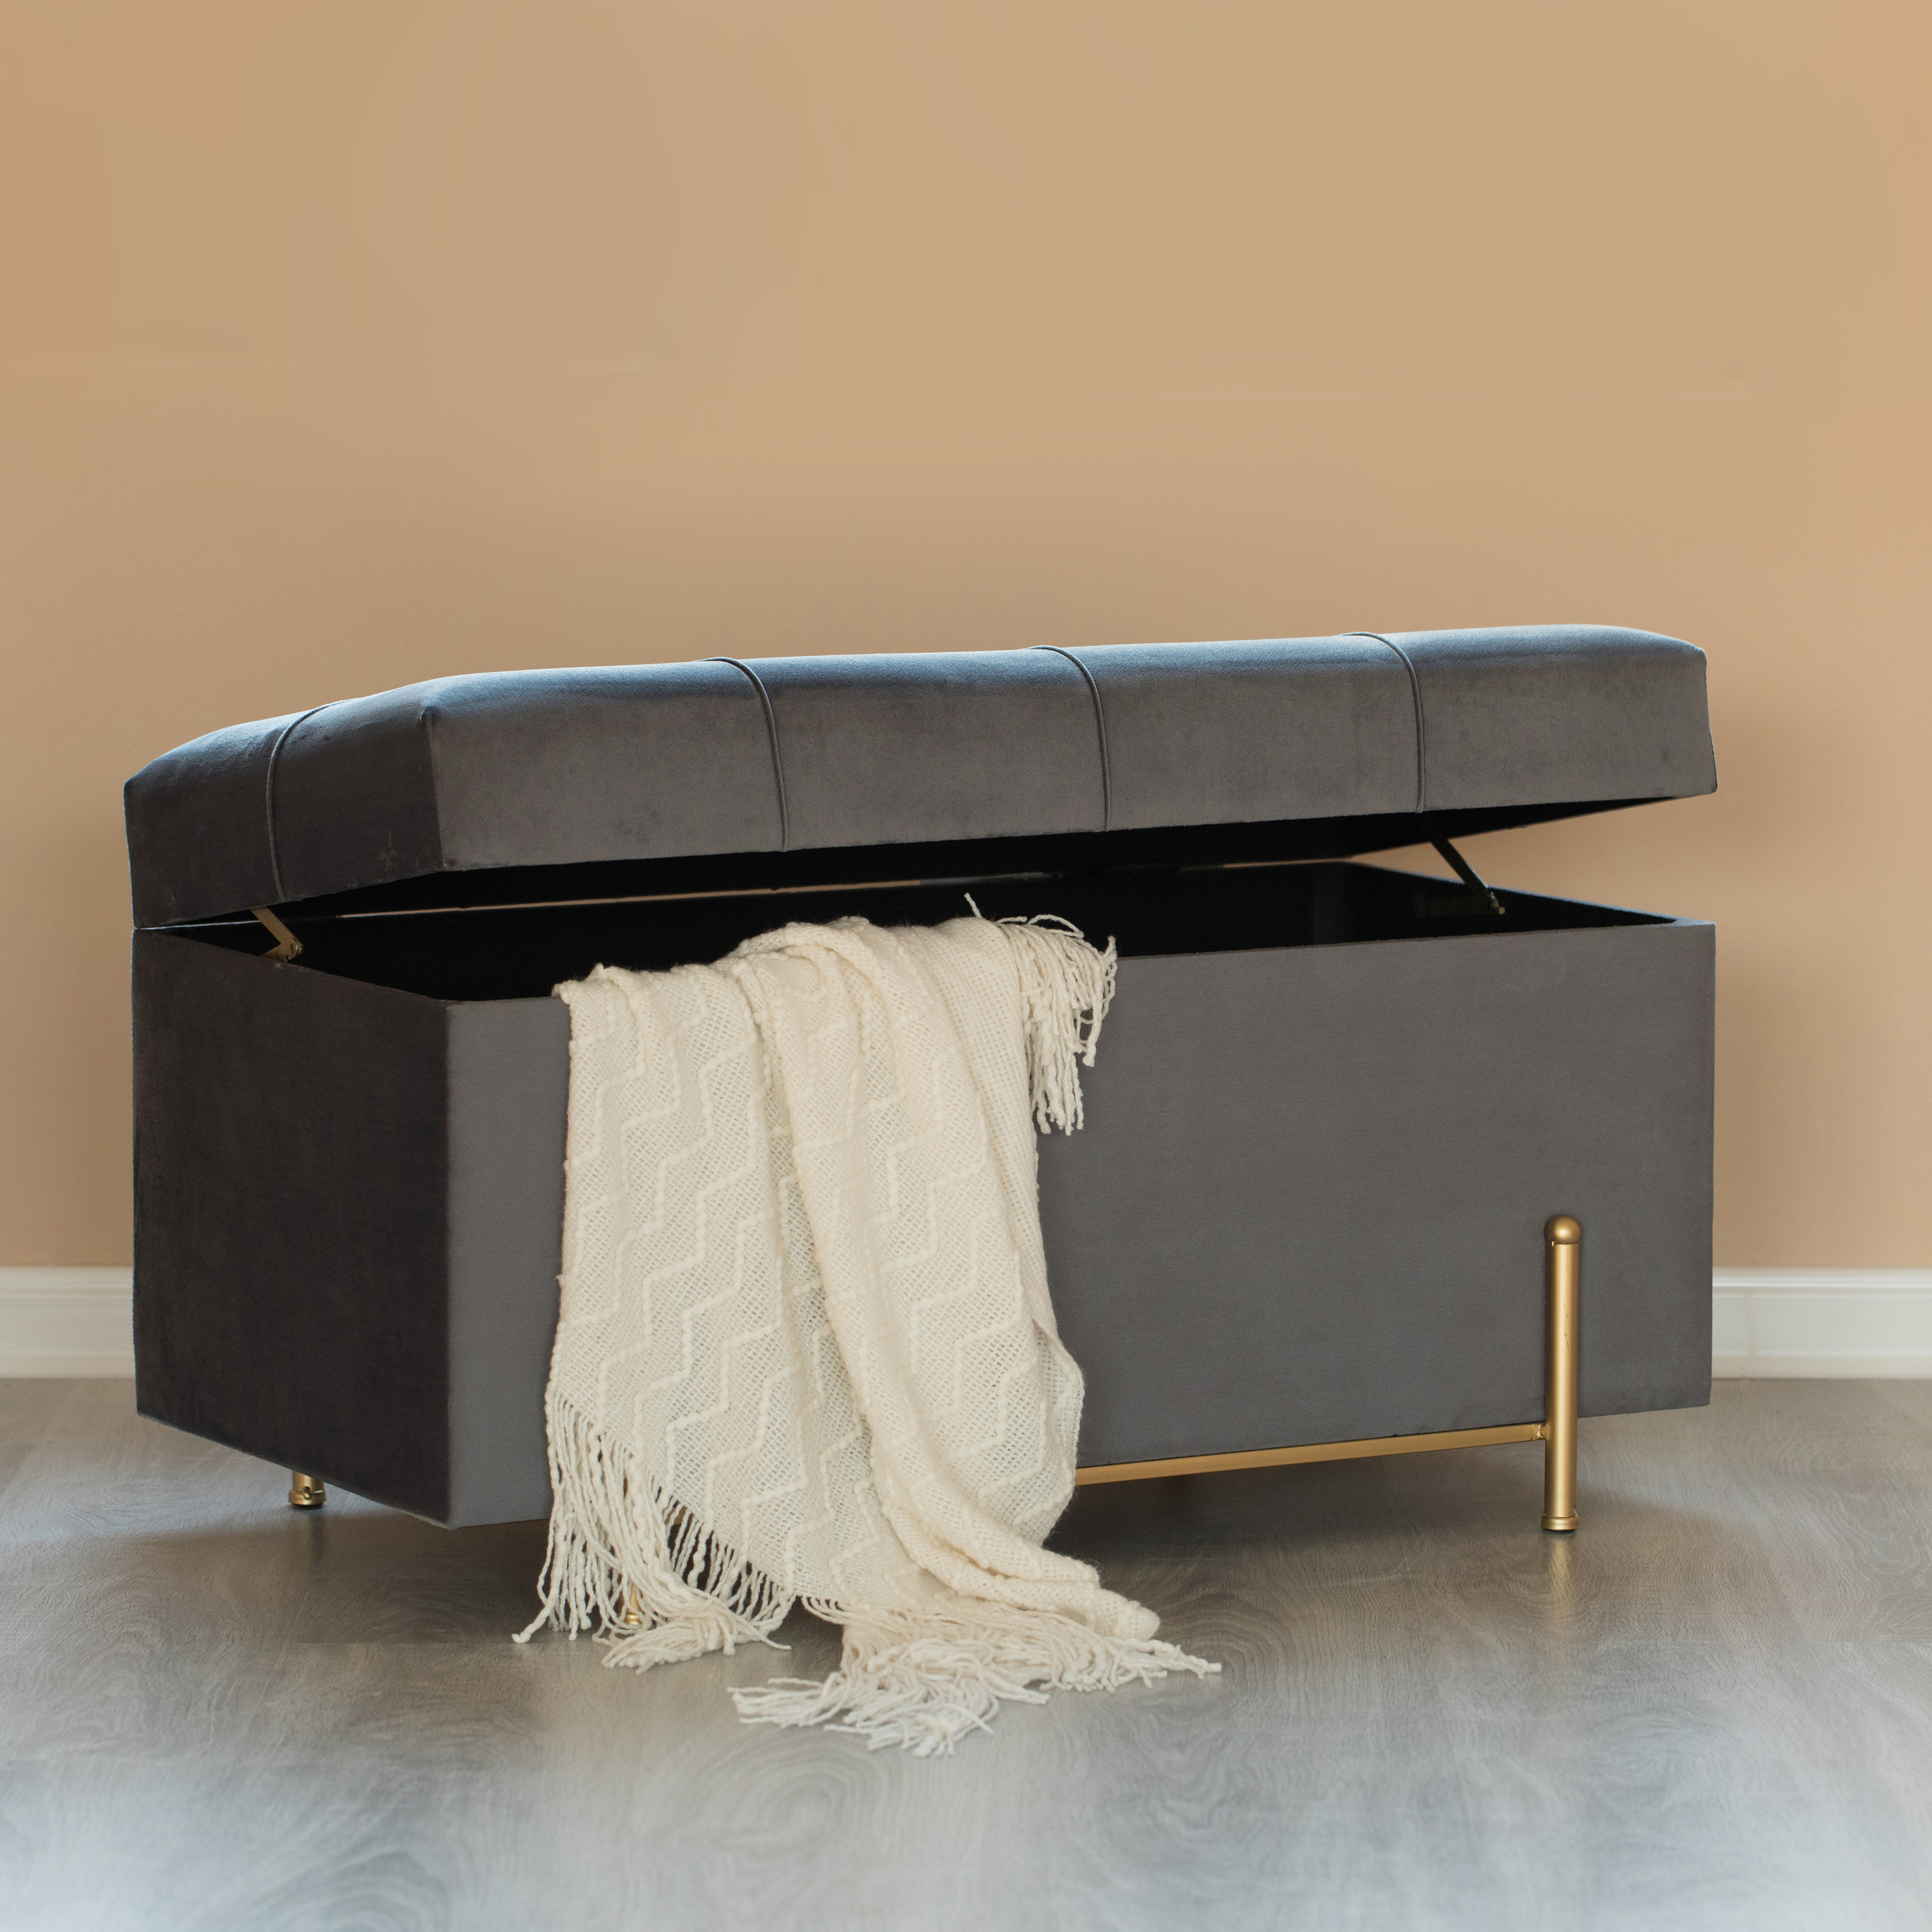 Large Rectangle Velvet Storage Ottoman Stool Box With Golden Legs Decorative Sitting Bench For Living Room Home Decor - Black